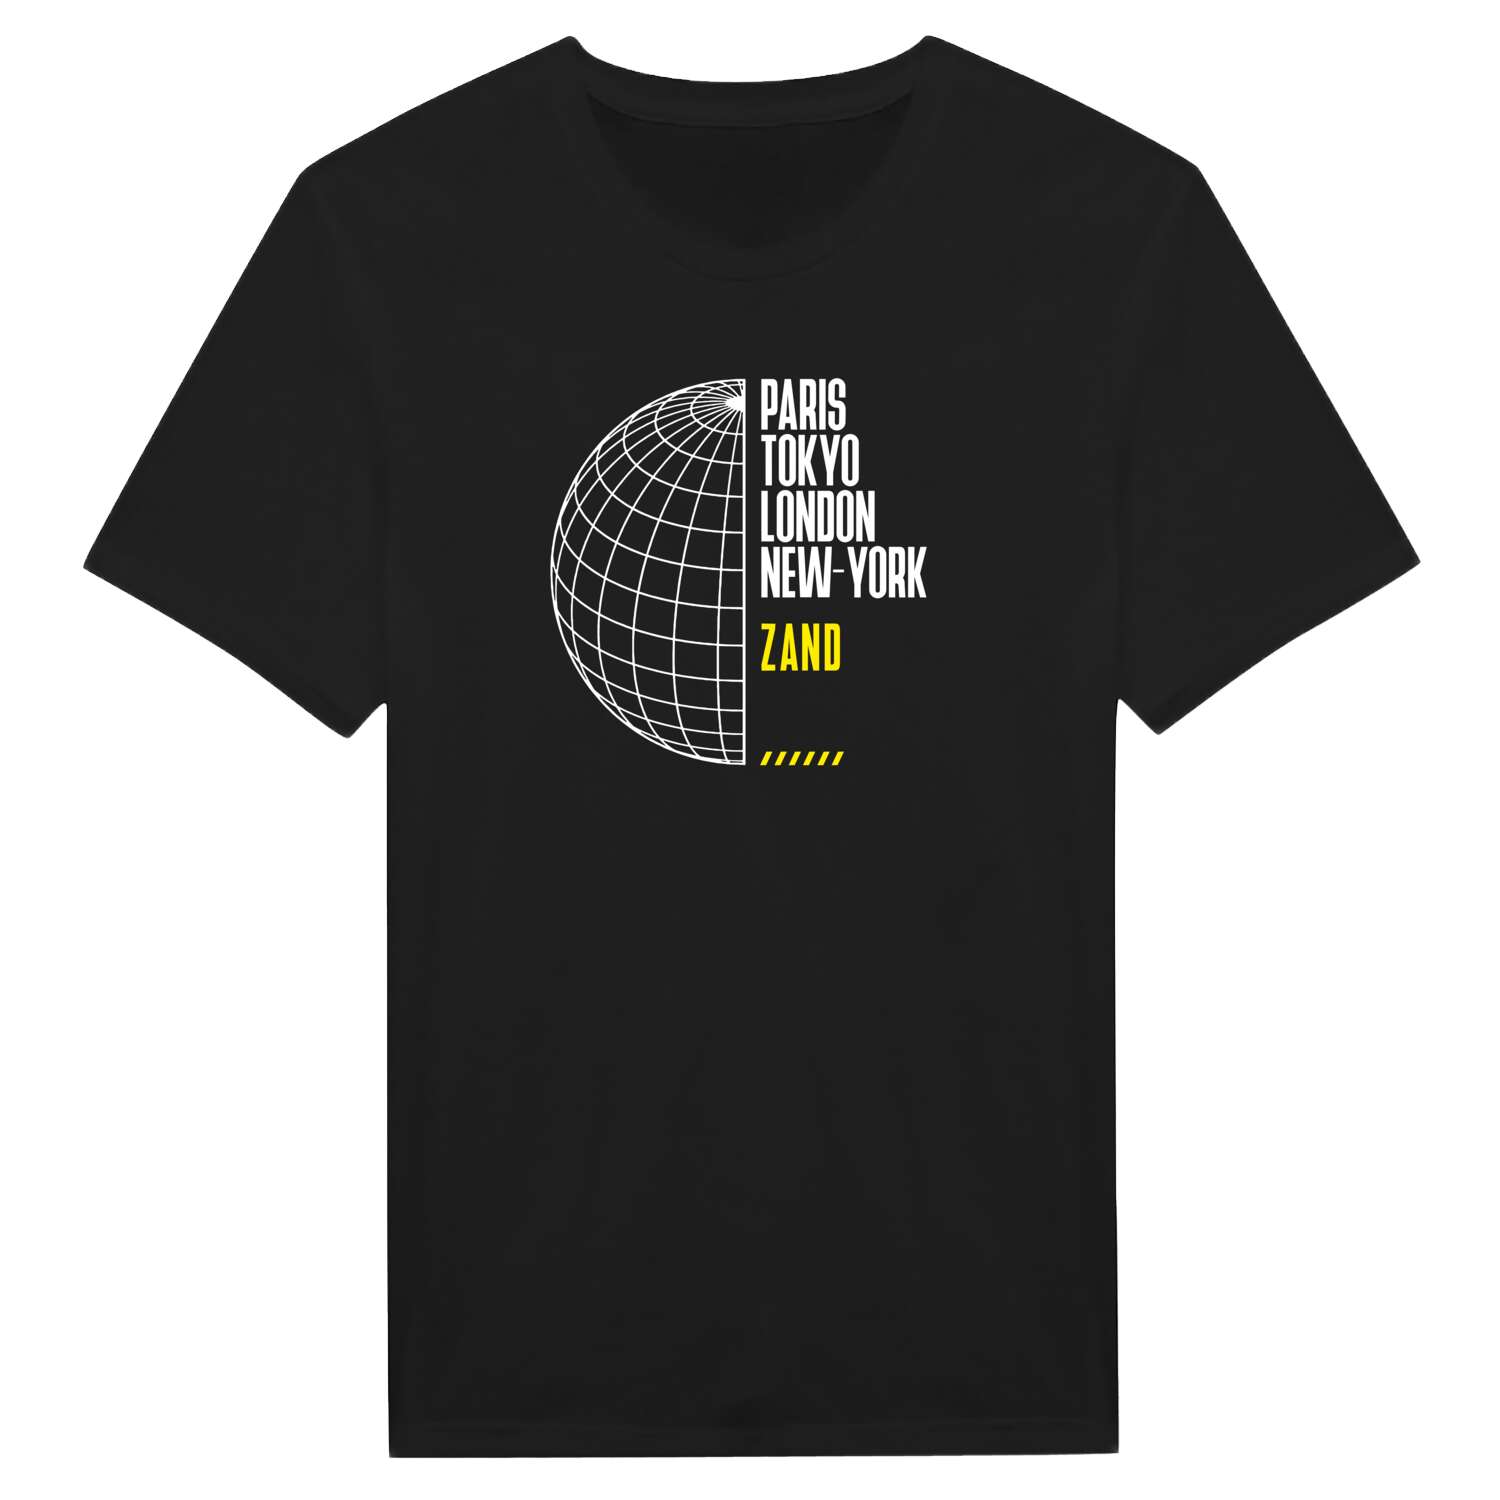 Zand T-Shirt »Paris Tokyo London«